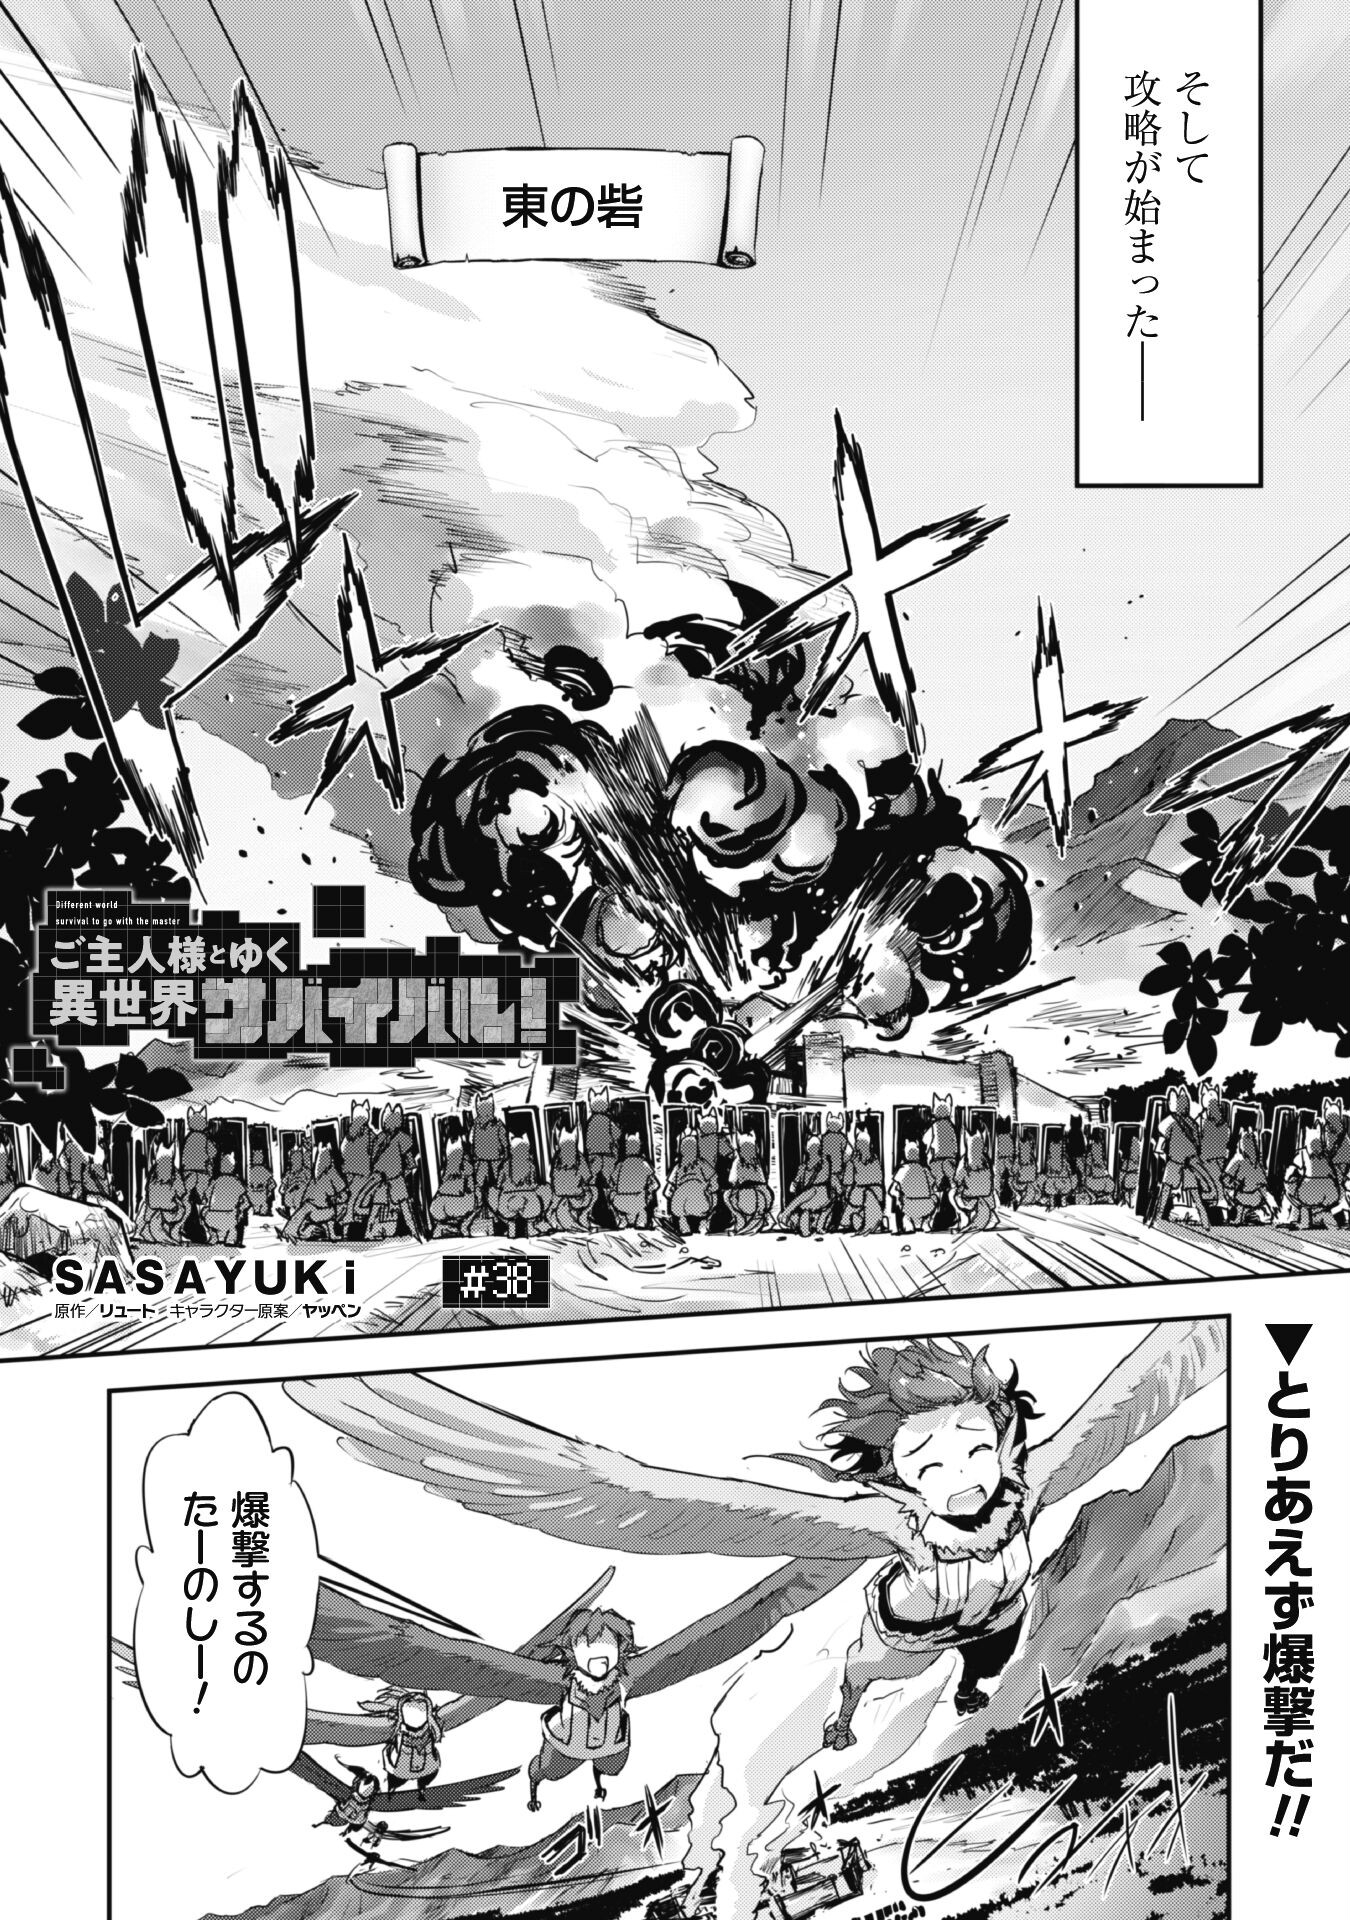 Goshujinsama to Yuku Isekai Survival! - Chapter 38 - Page 3